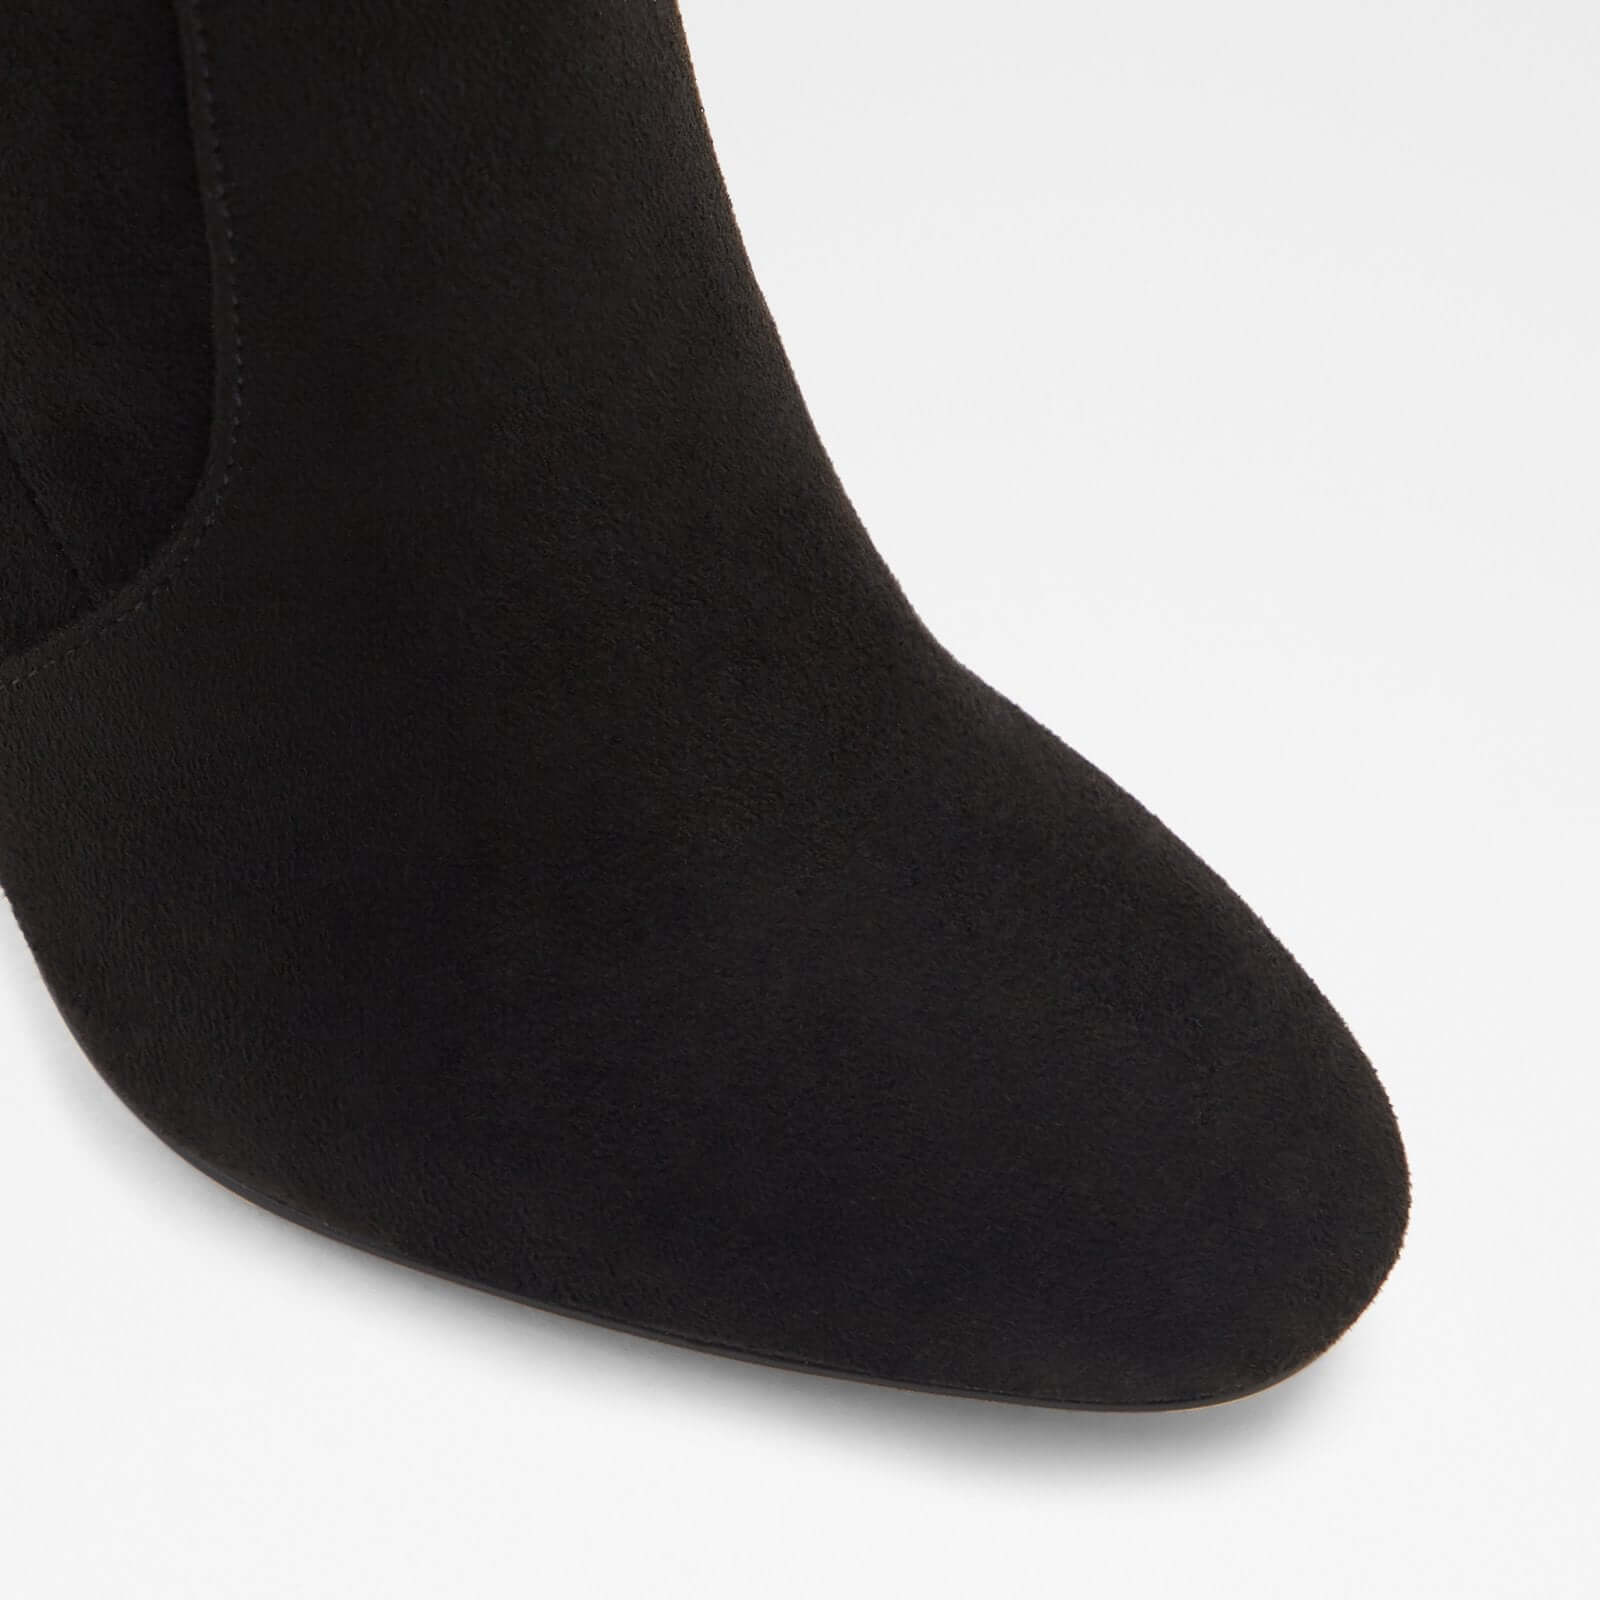 Aldo Women's Heeled Ankle Boot Aurellane (Black) – ALDO Shoes UK